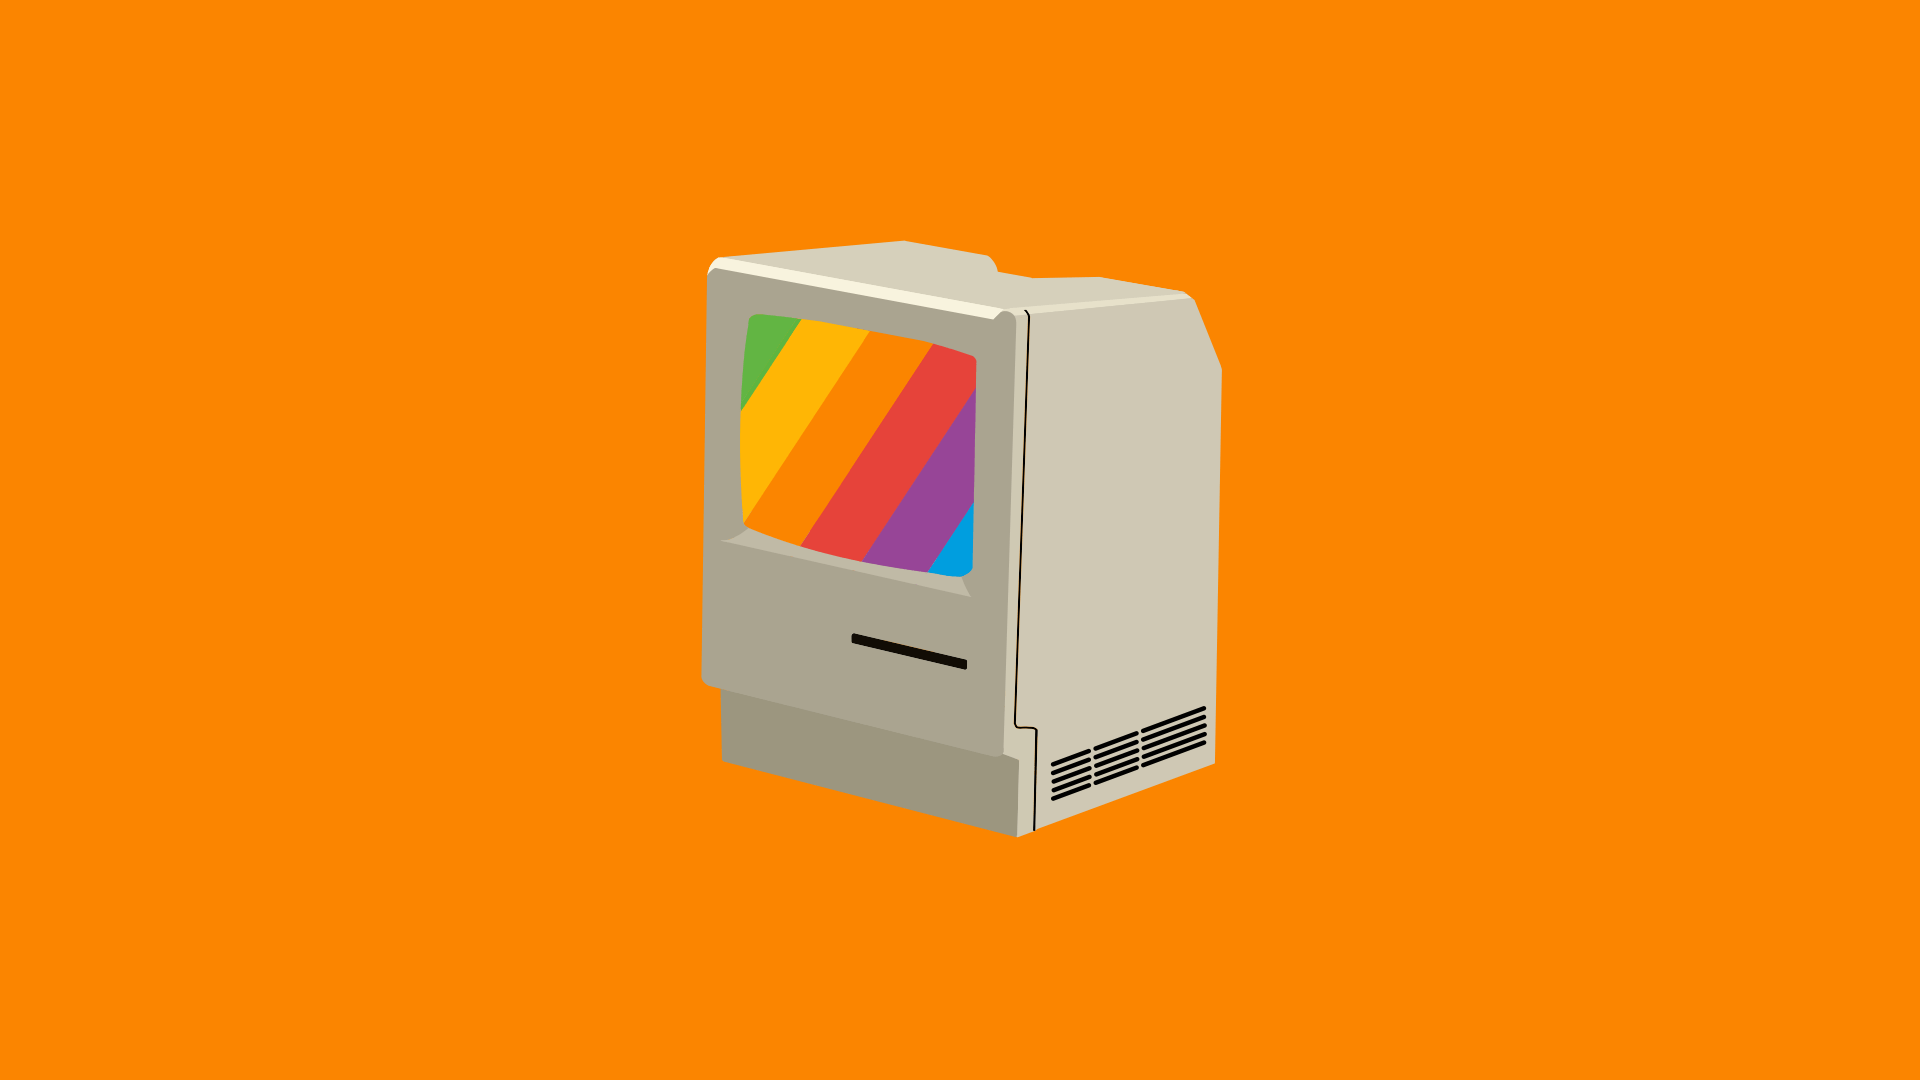 Colorful Macintosh gif and wallpaper I made!